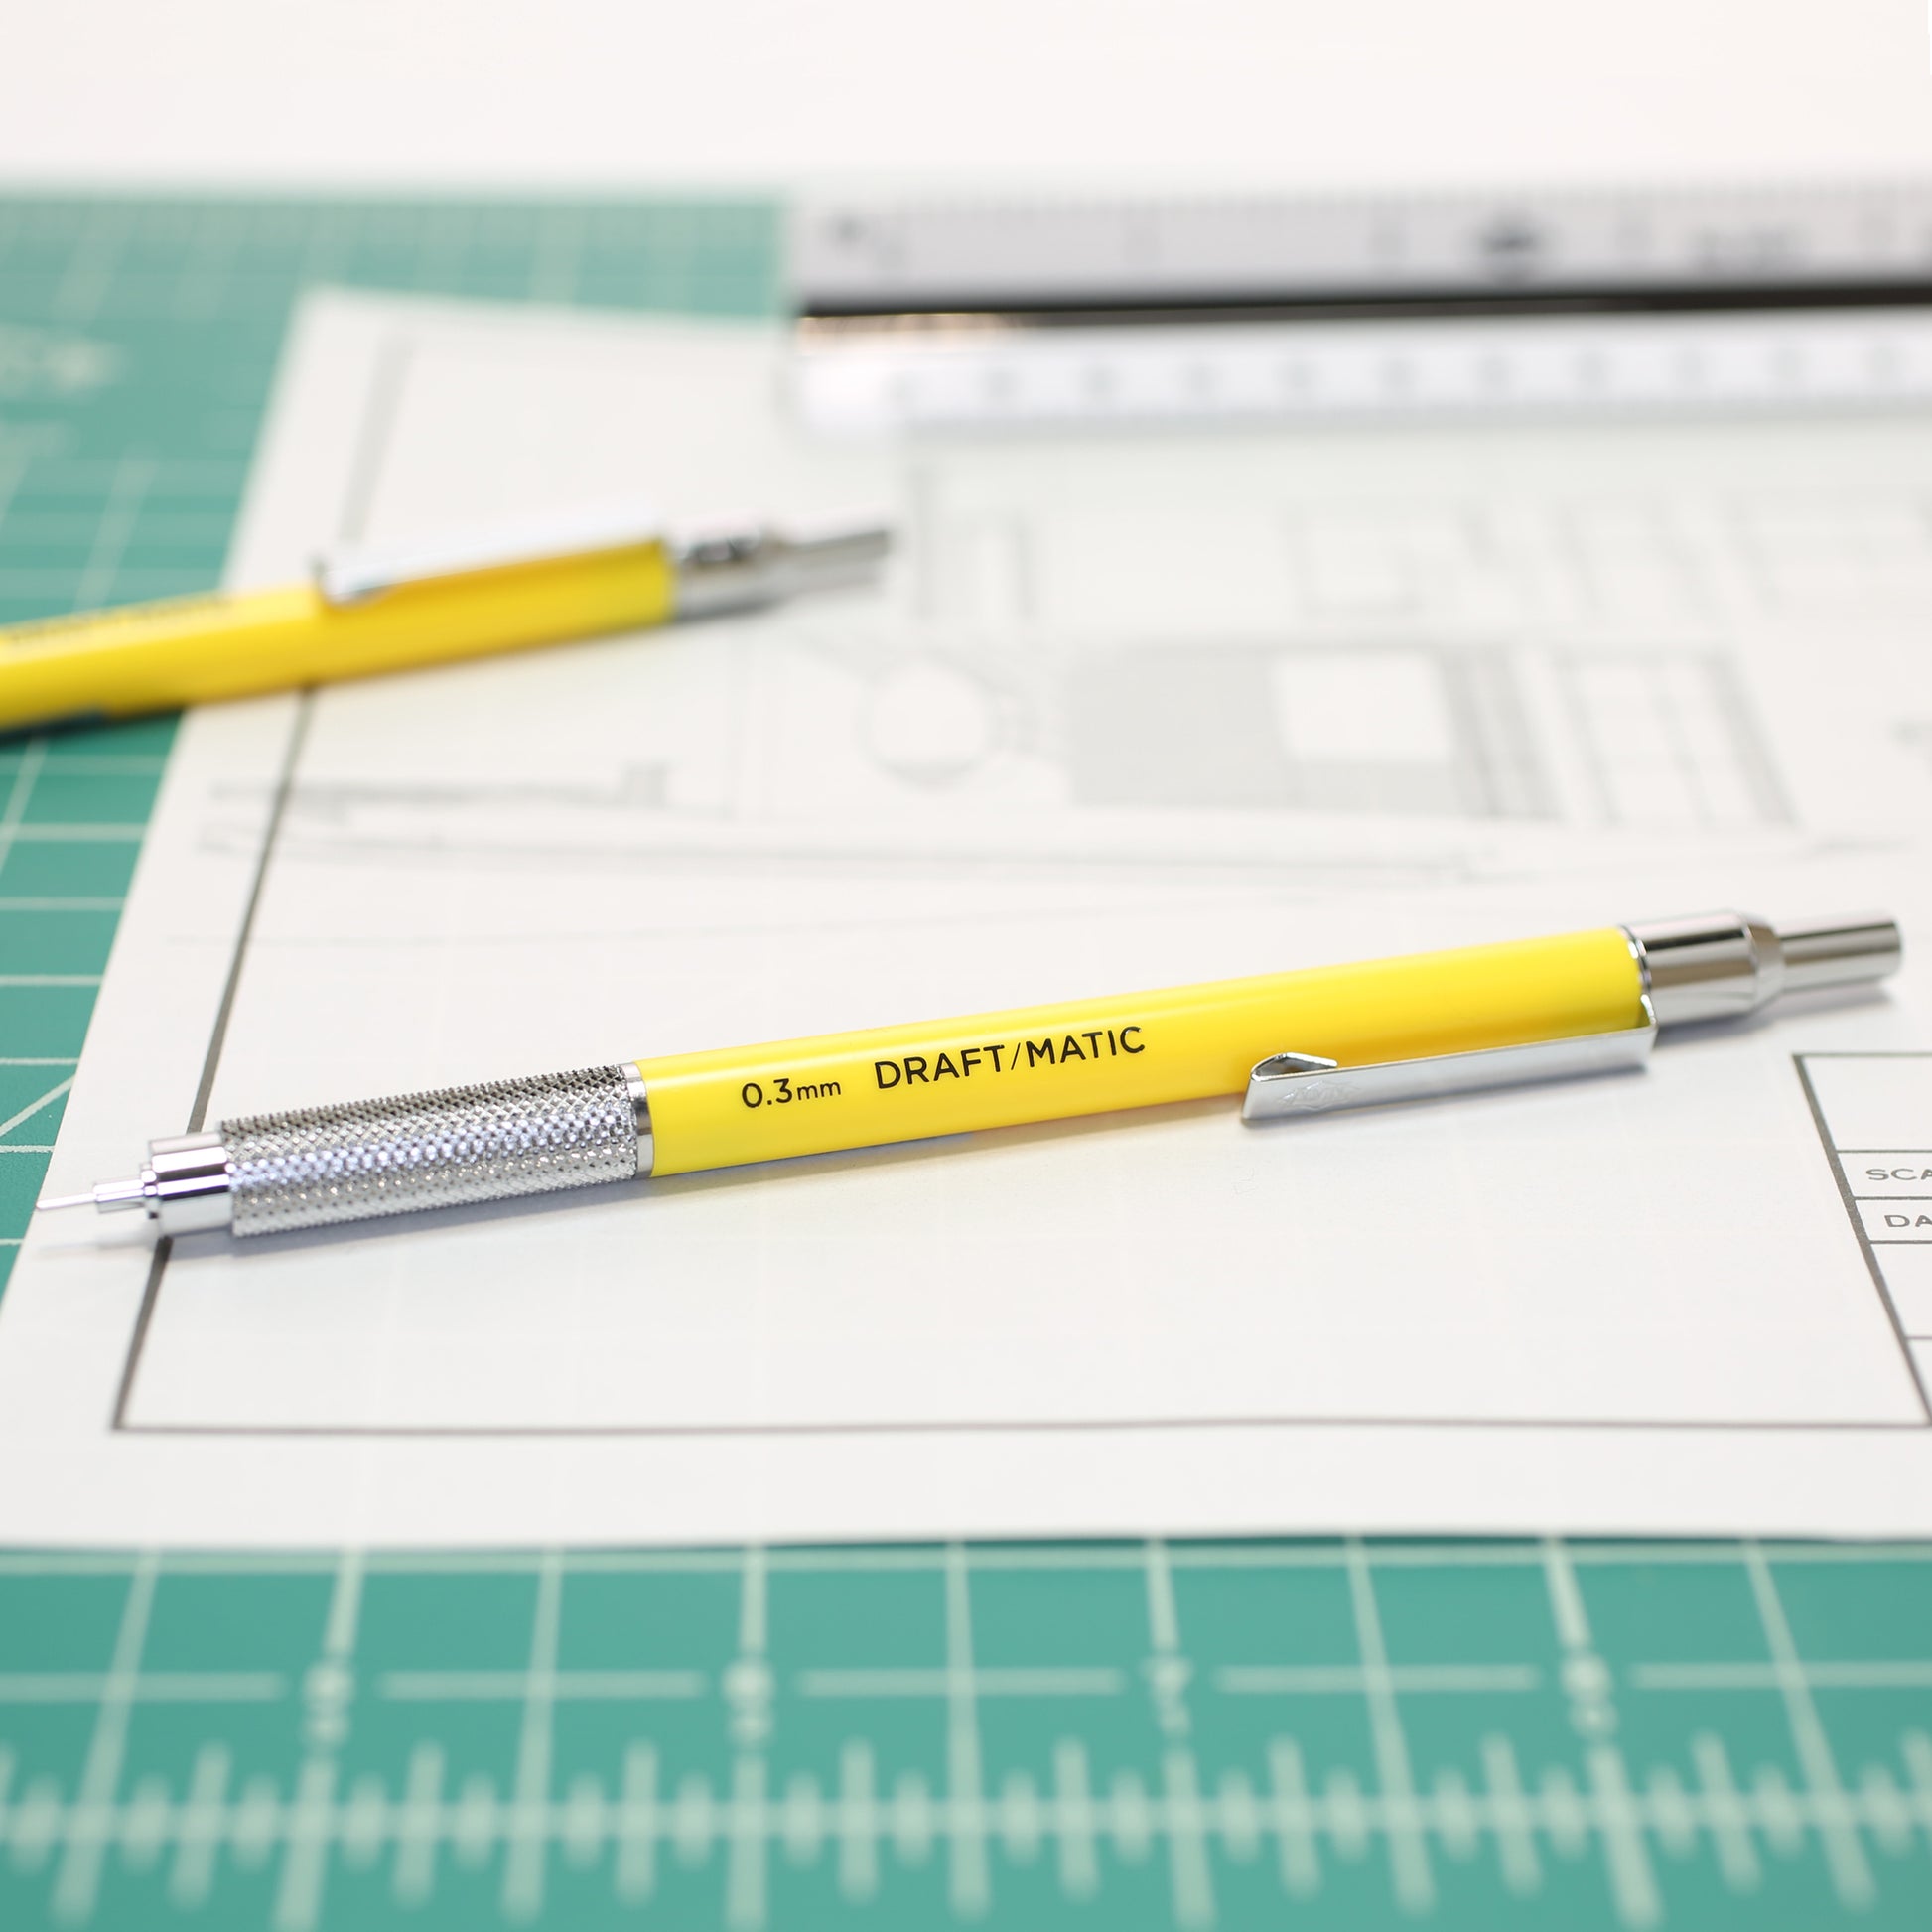 Alvin Draft/Matic Drafting Pencils